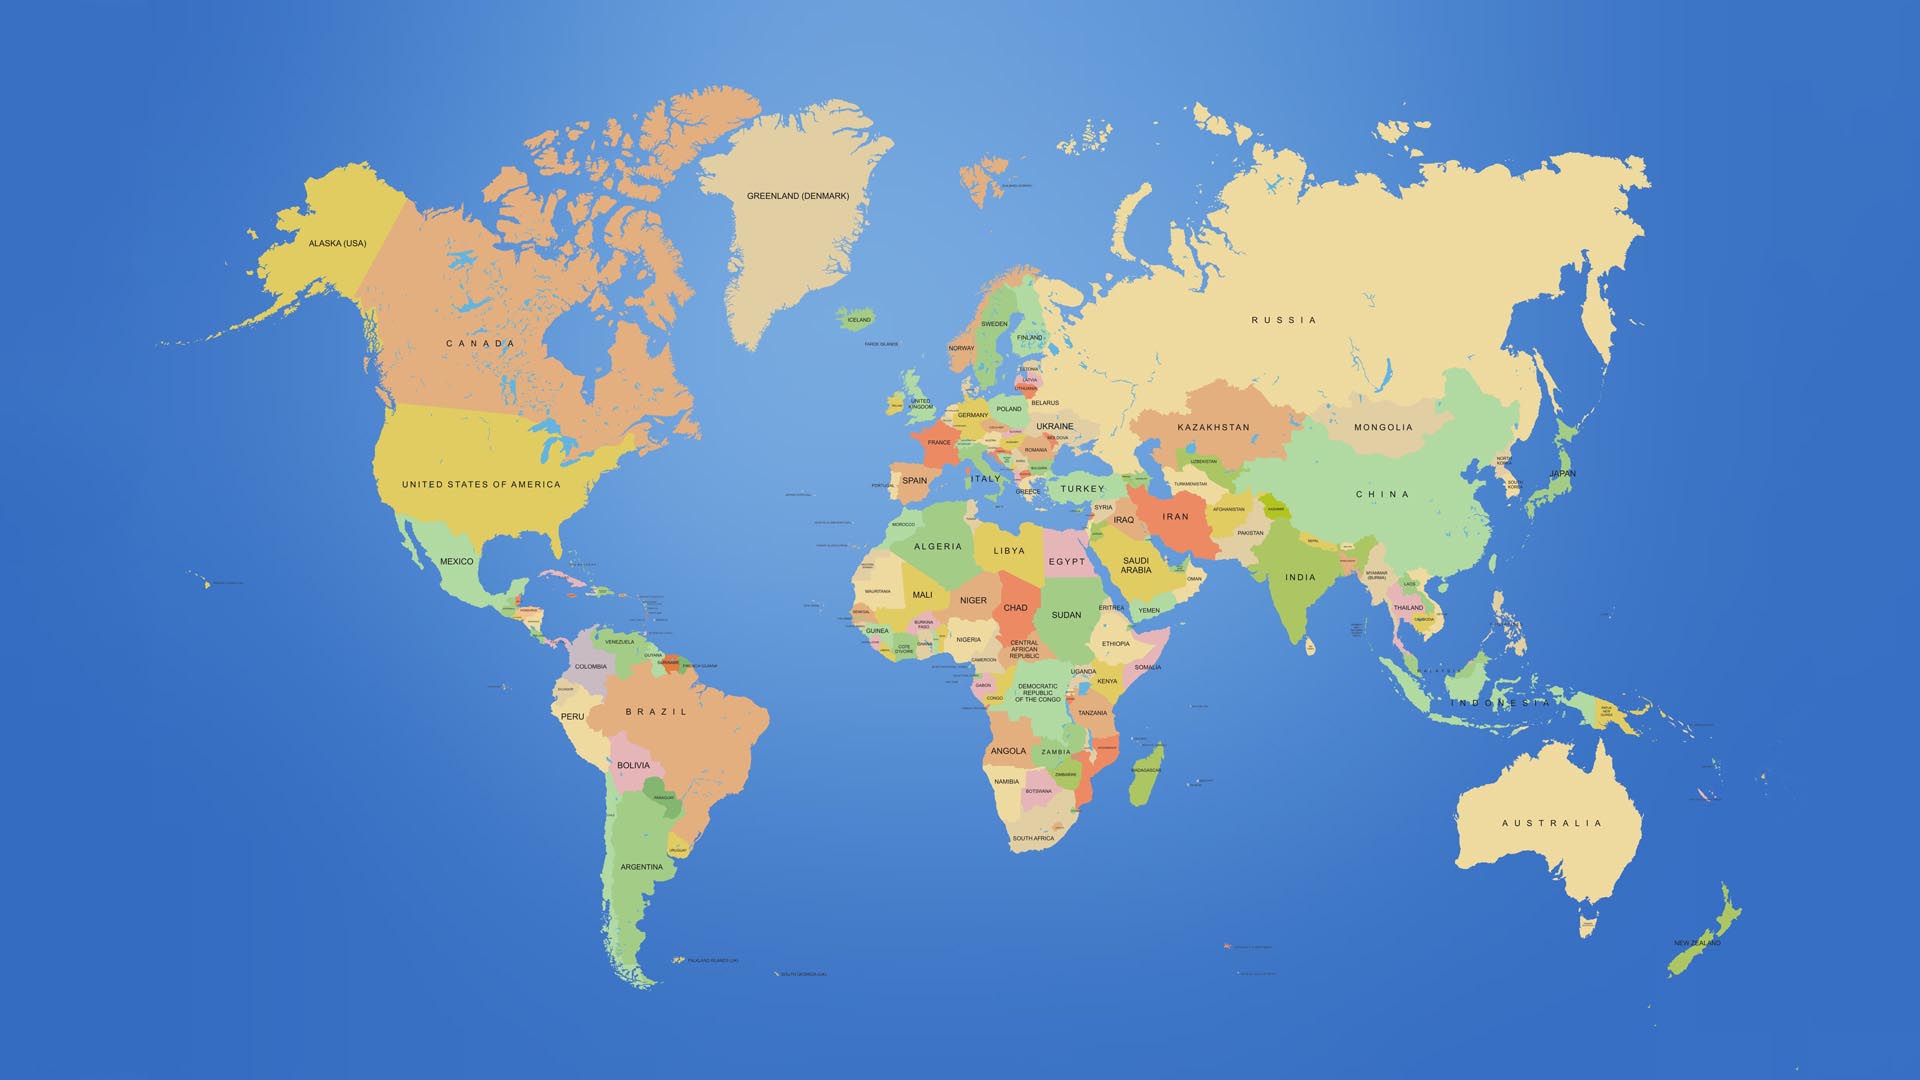 hd map of the world World Map Wallpaper Hd Pixelstalk Net hd map of the world